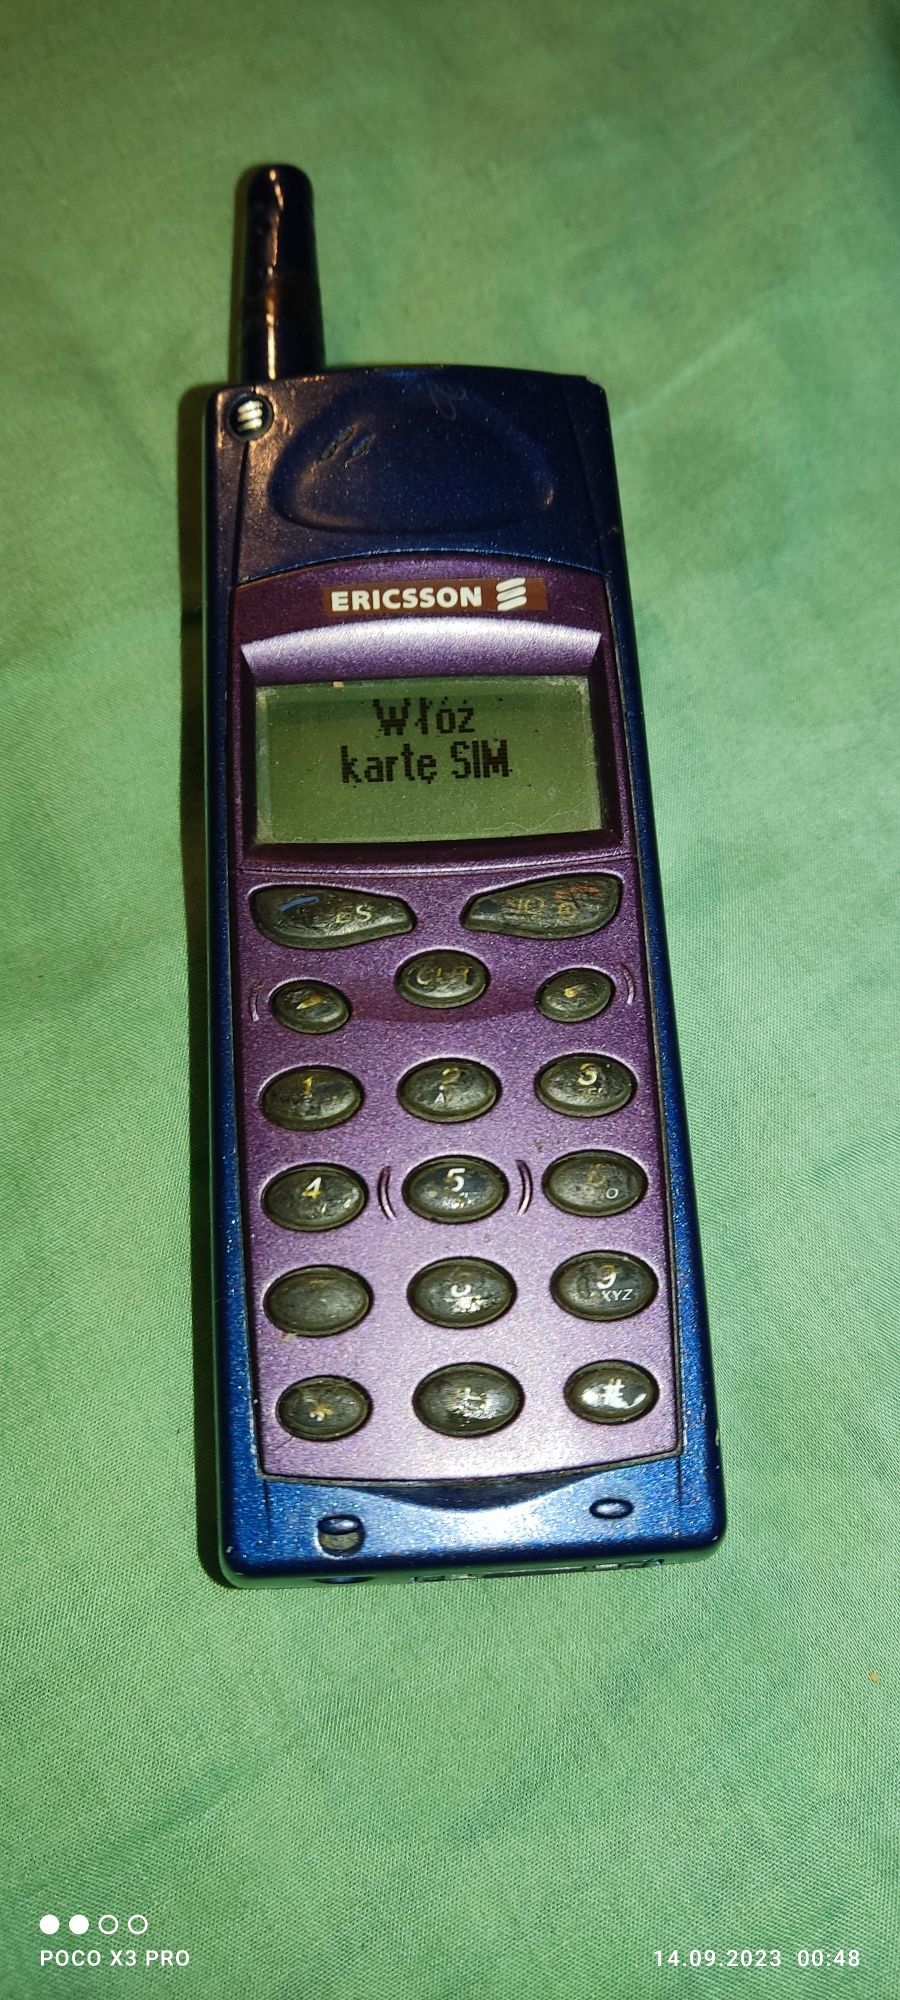 Kolekcjonerski telefon firmy Ericsson a1018s zaybtek